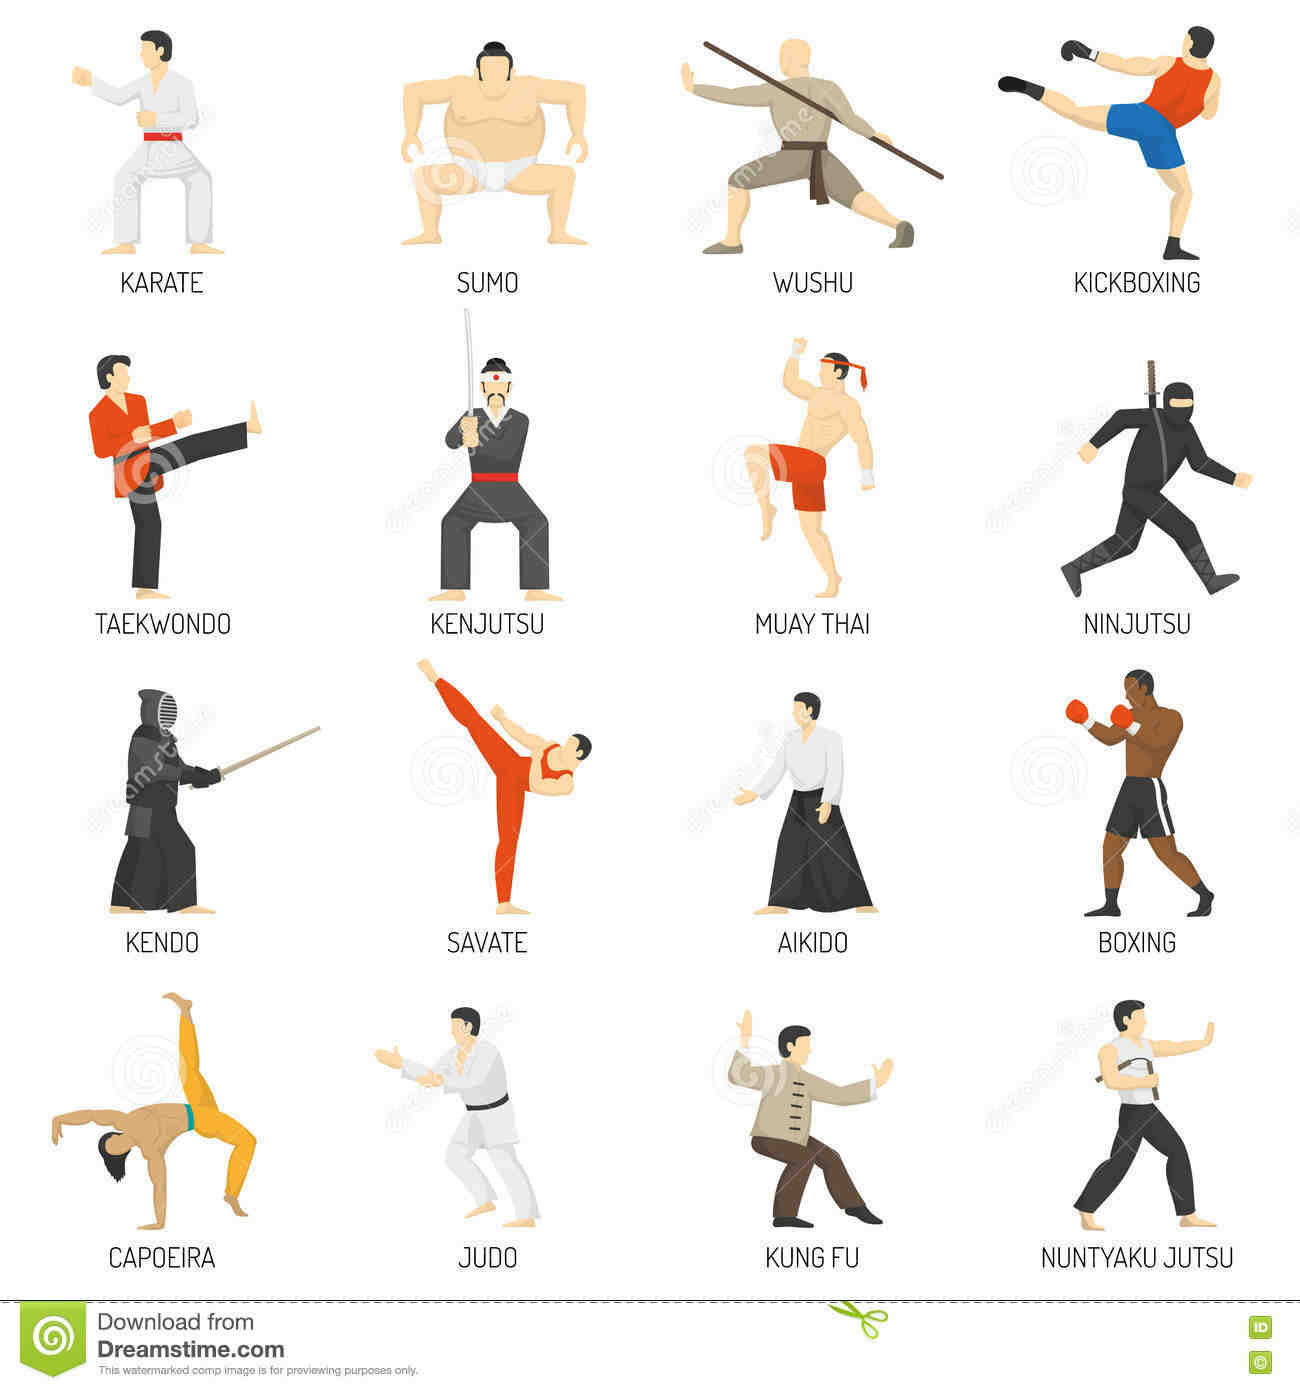 Is Kung Fu better than Taekwondo?